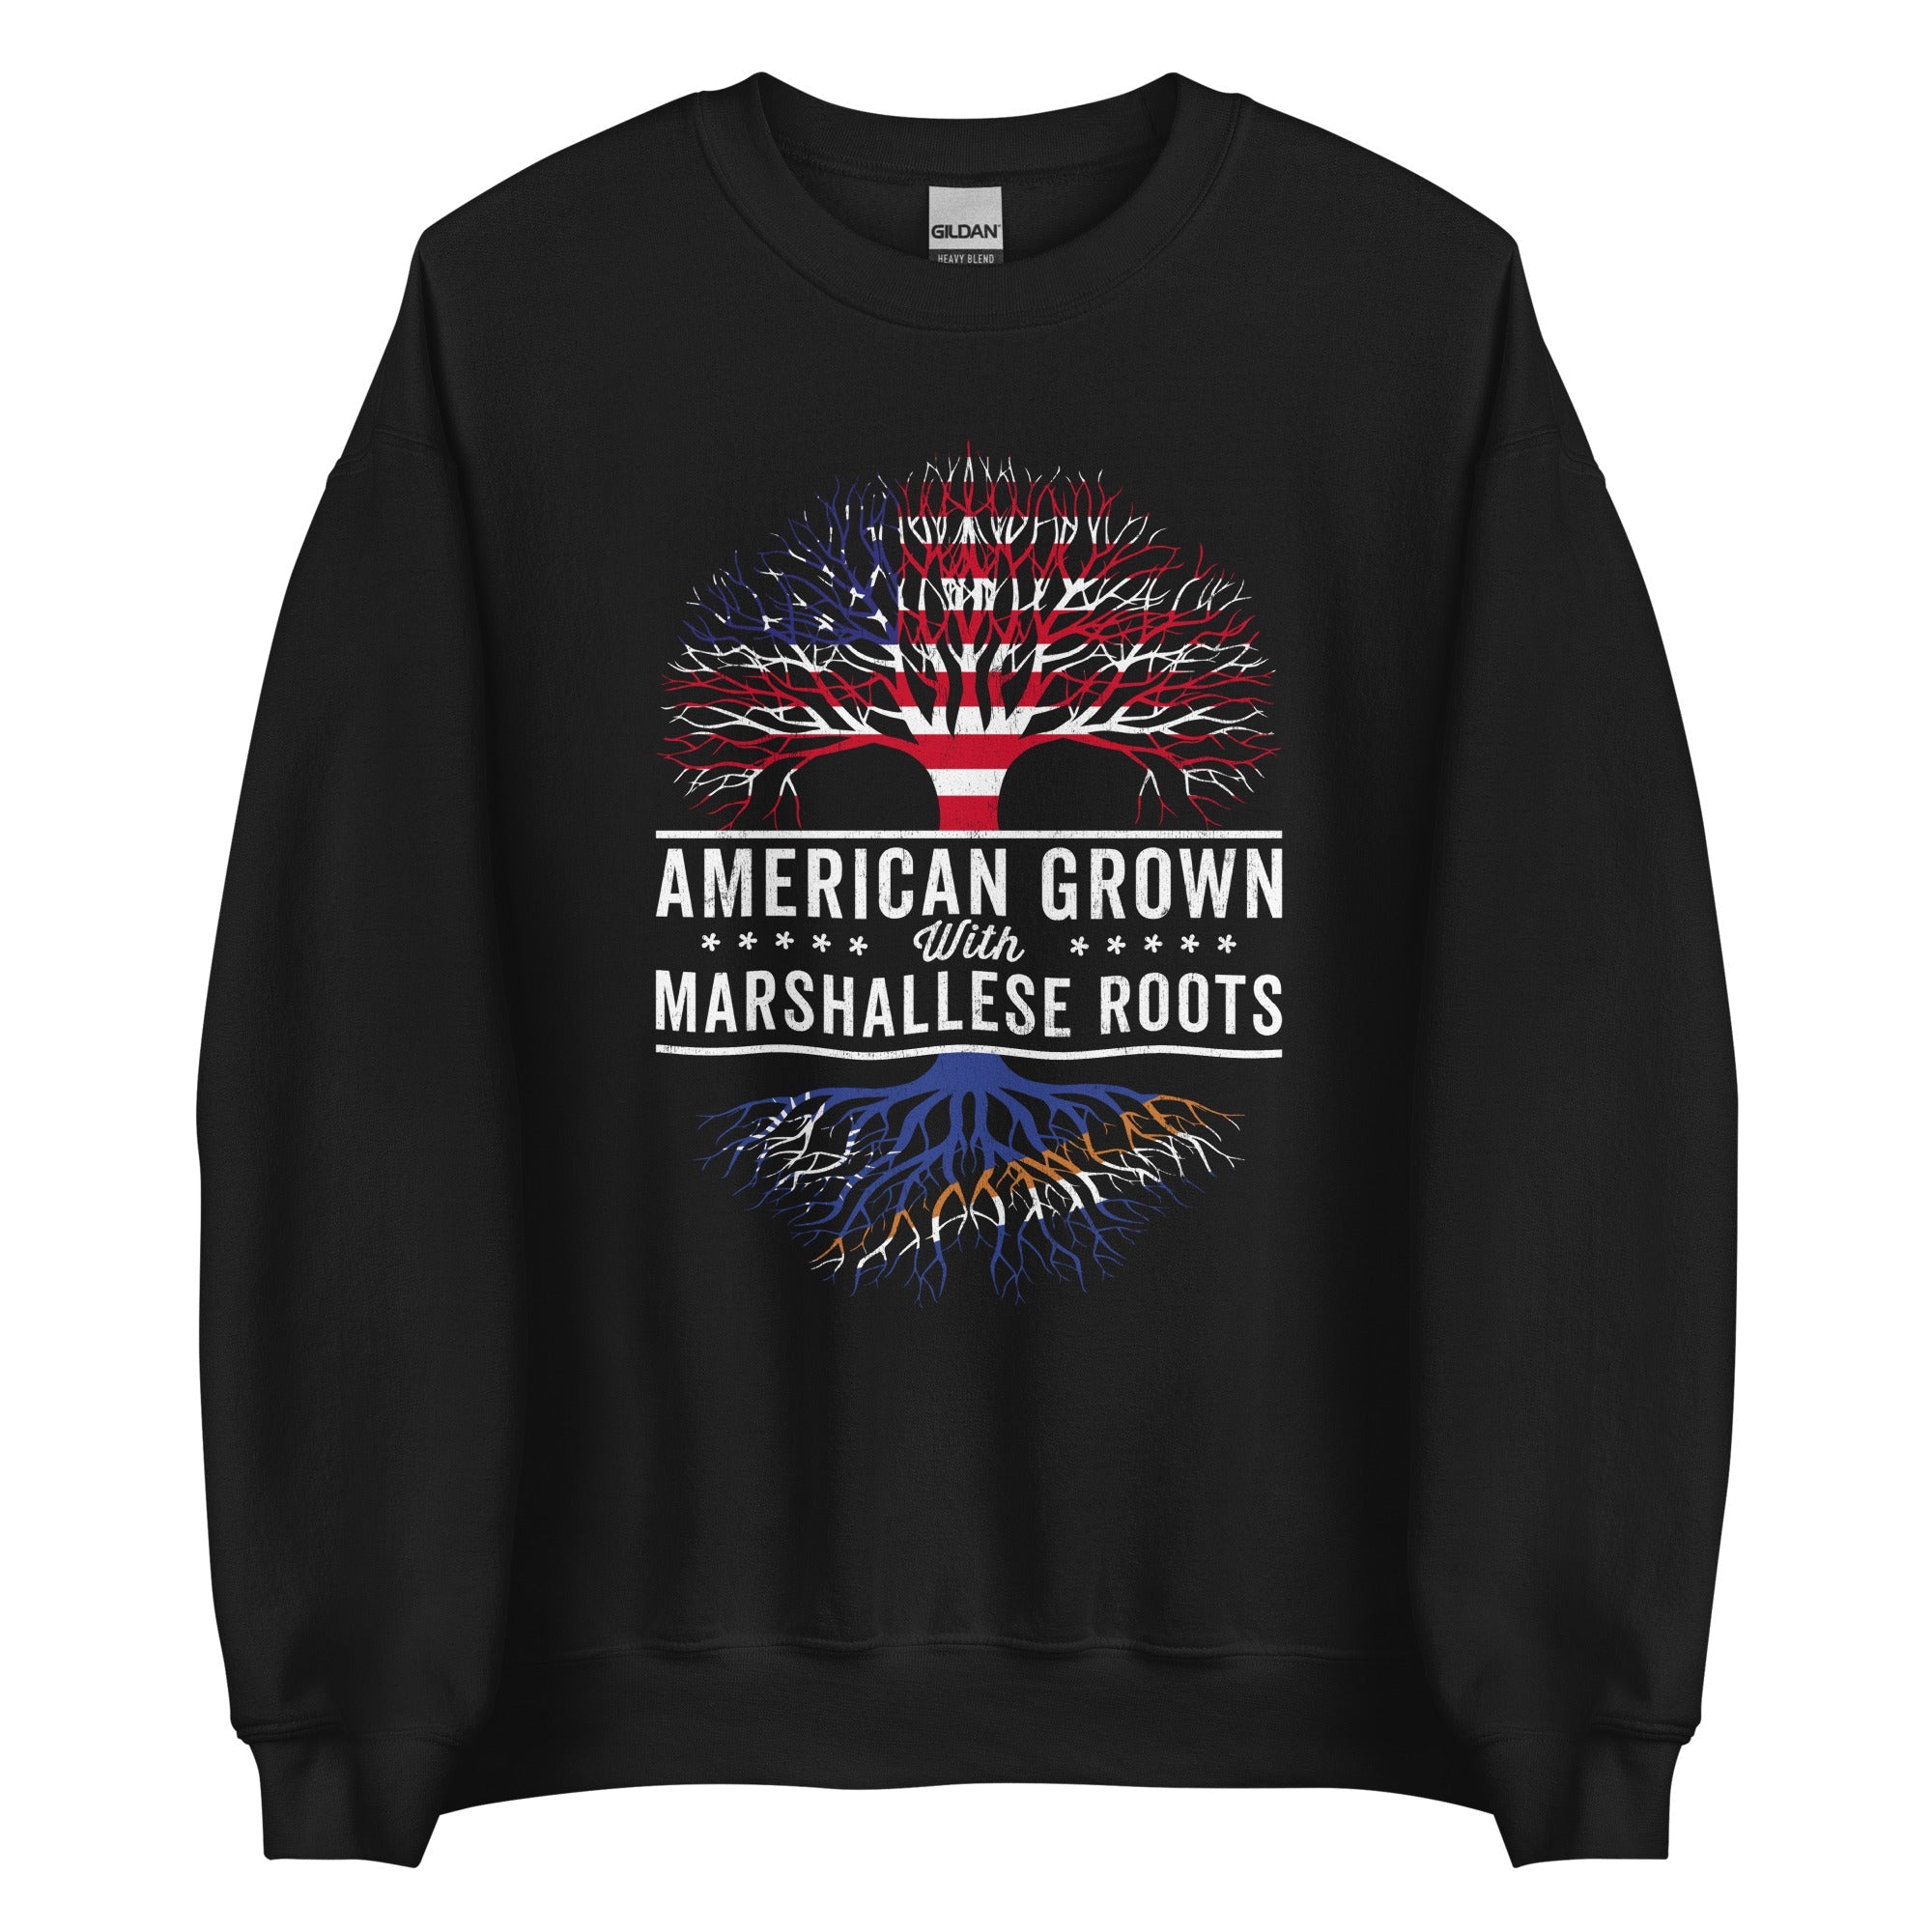 American Grown Marshallese Roots Flag Sweatshirt